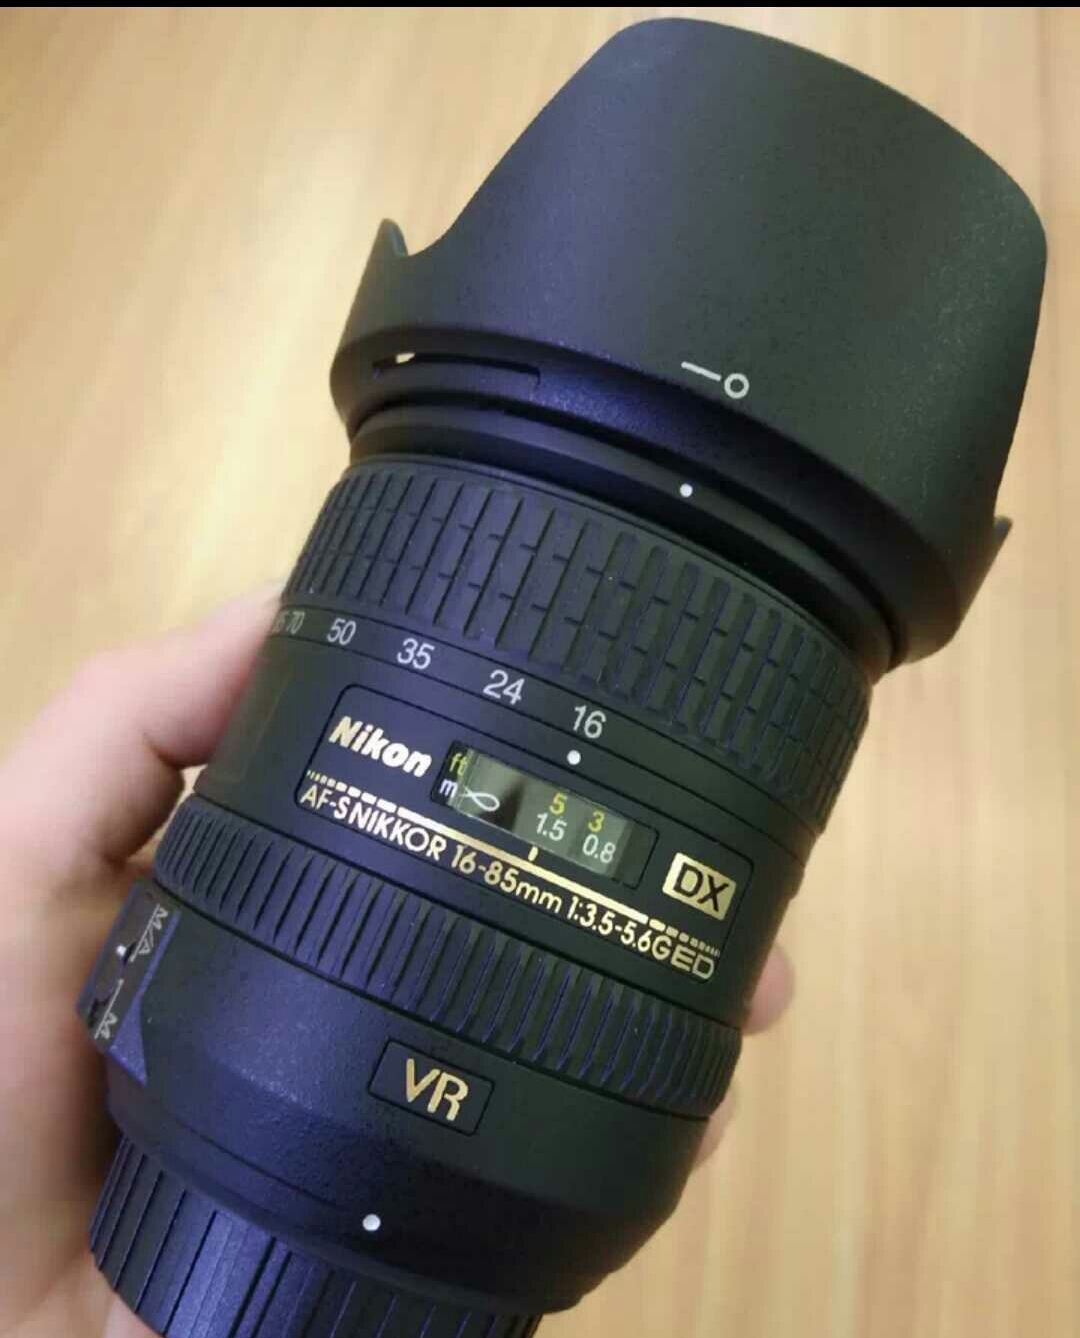  Nikon D7000 self use, normal use, no scratch, no bump 